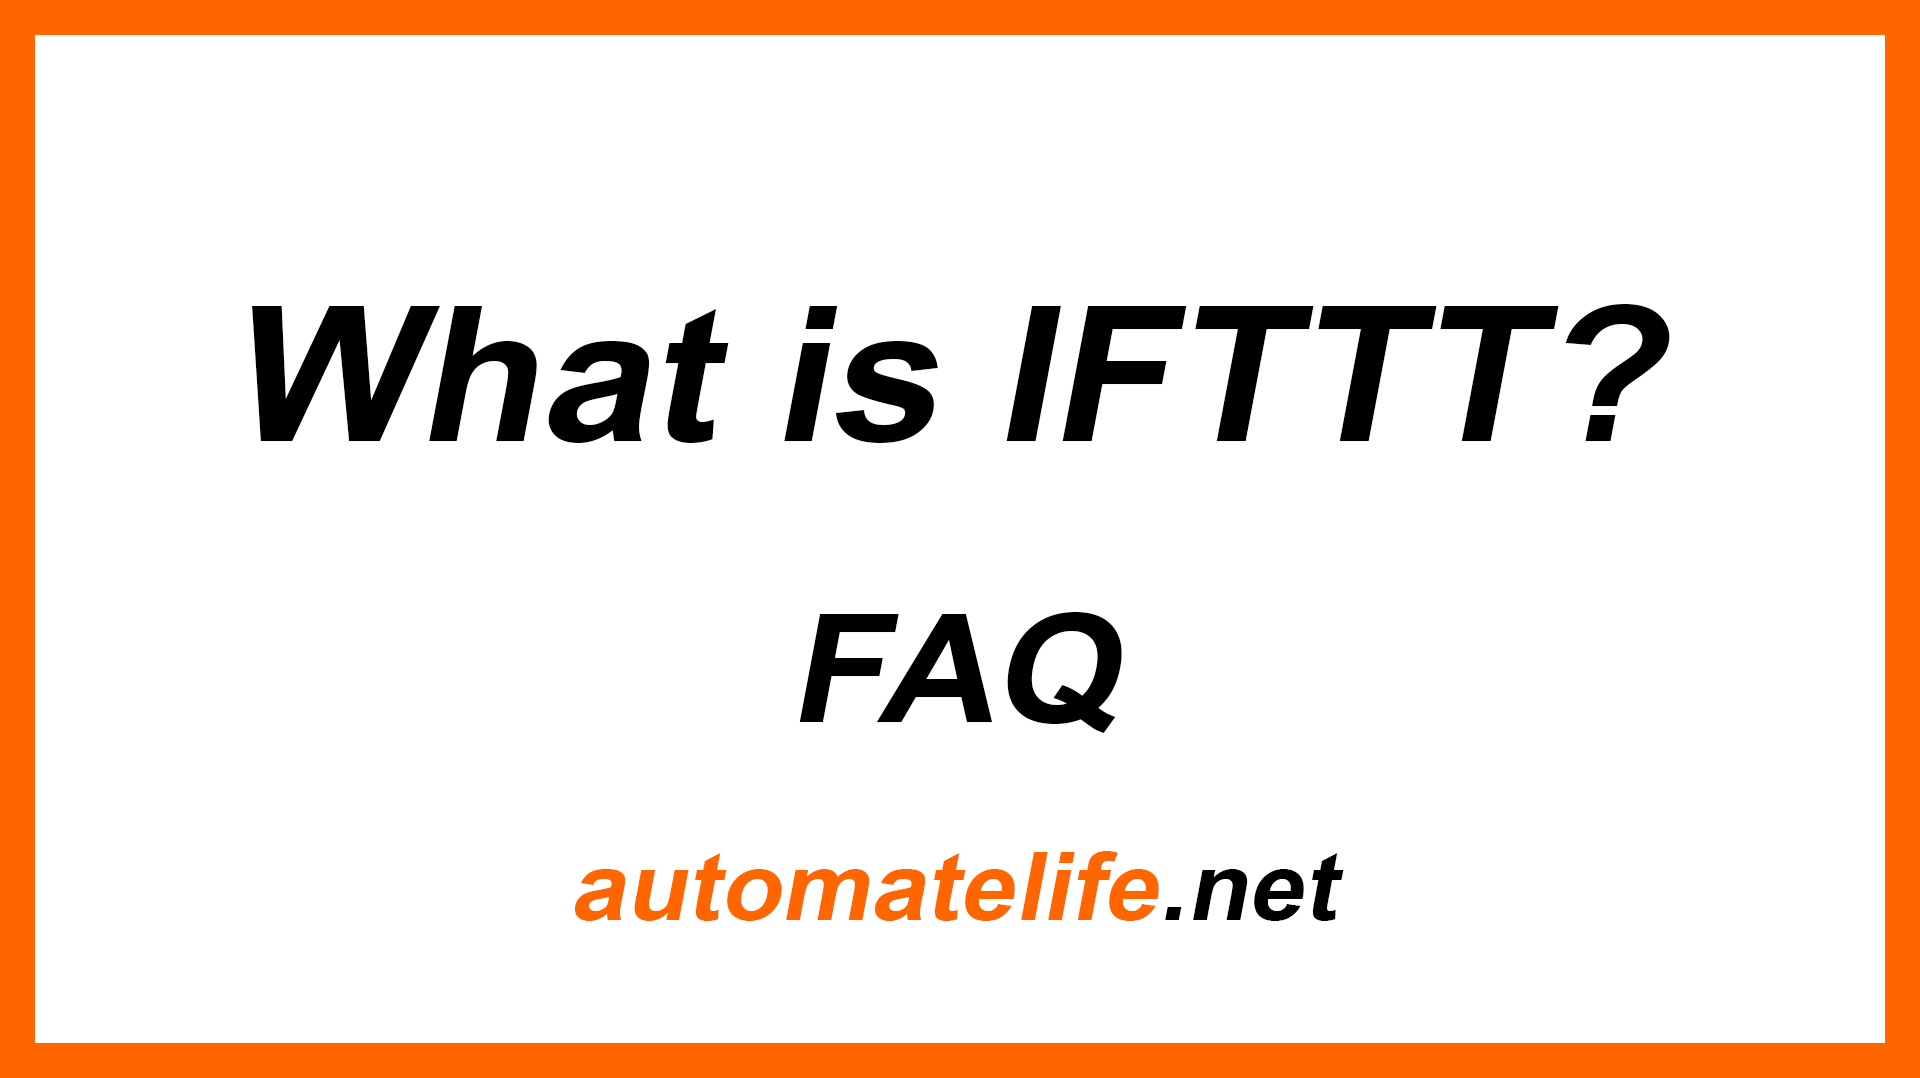 IFTTT: If-This-Then-That FAQ